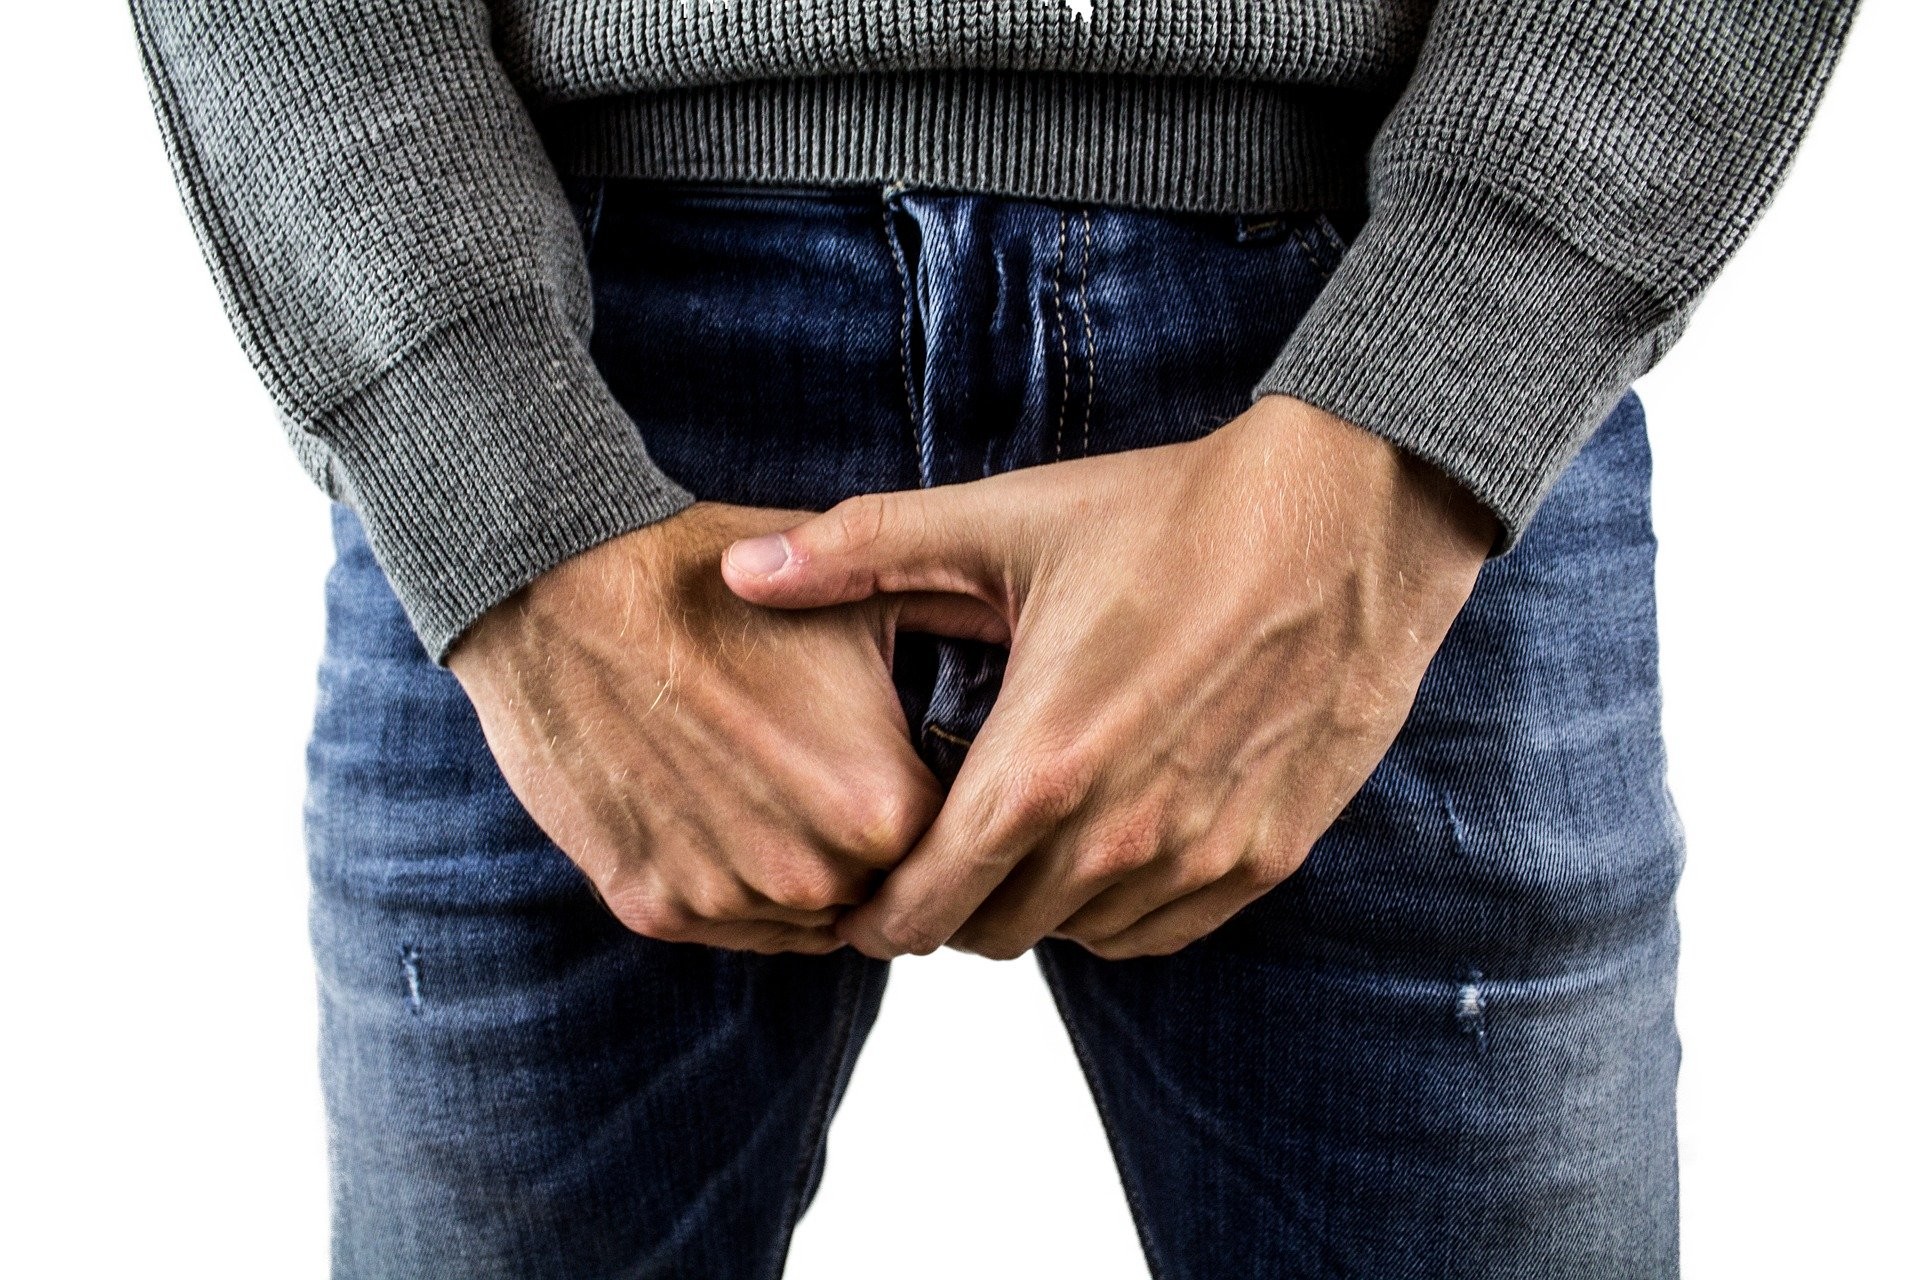 Pênis de homem necrosa após mordida durante sexo oral (Foto: Pixabay)